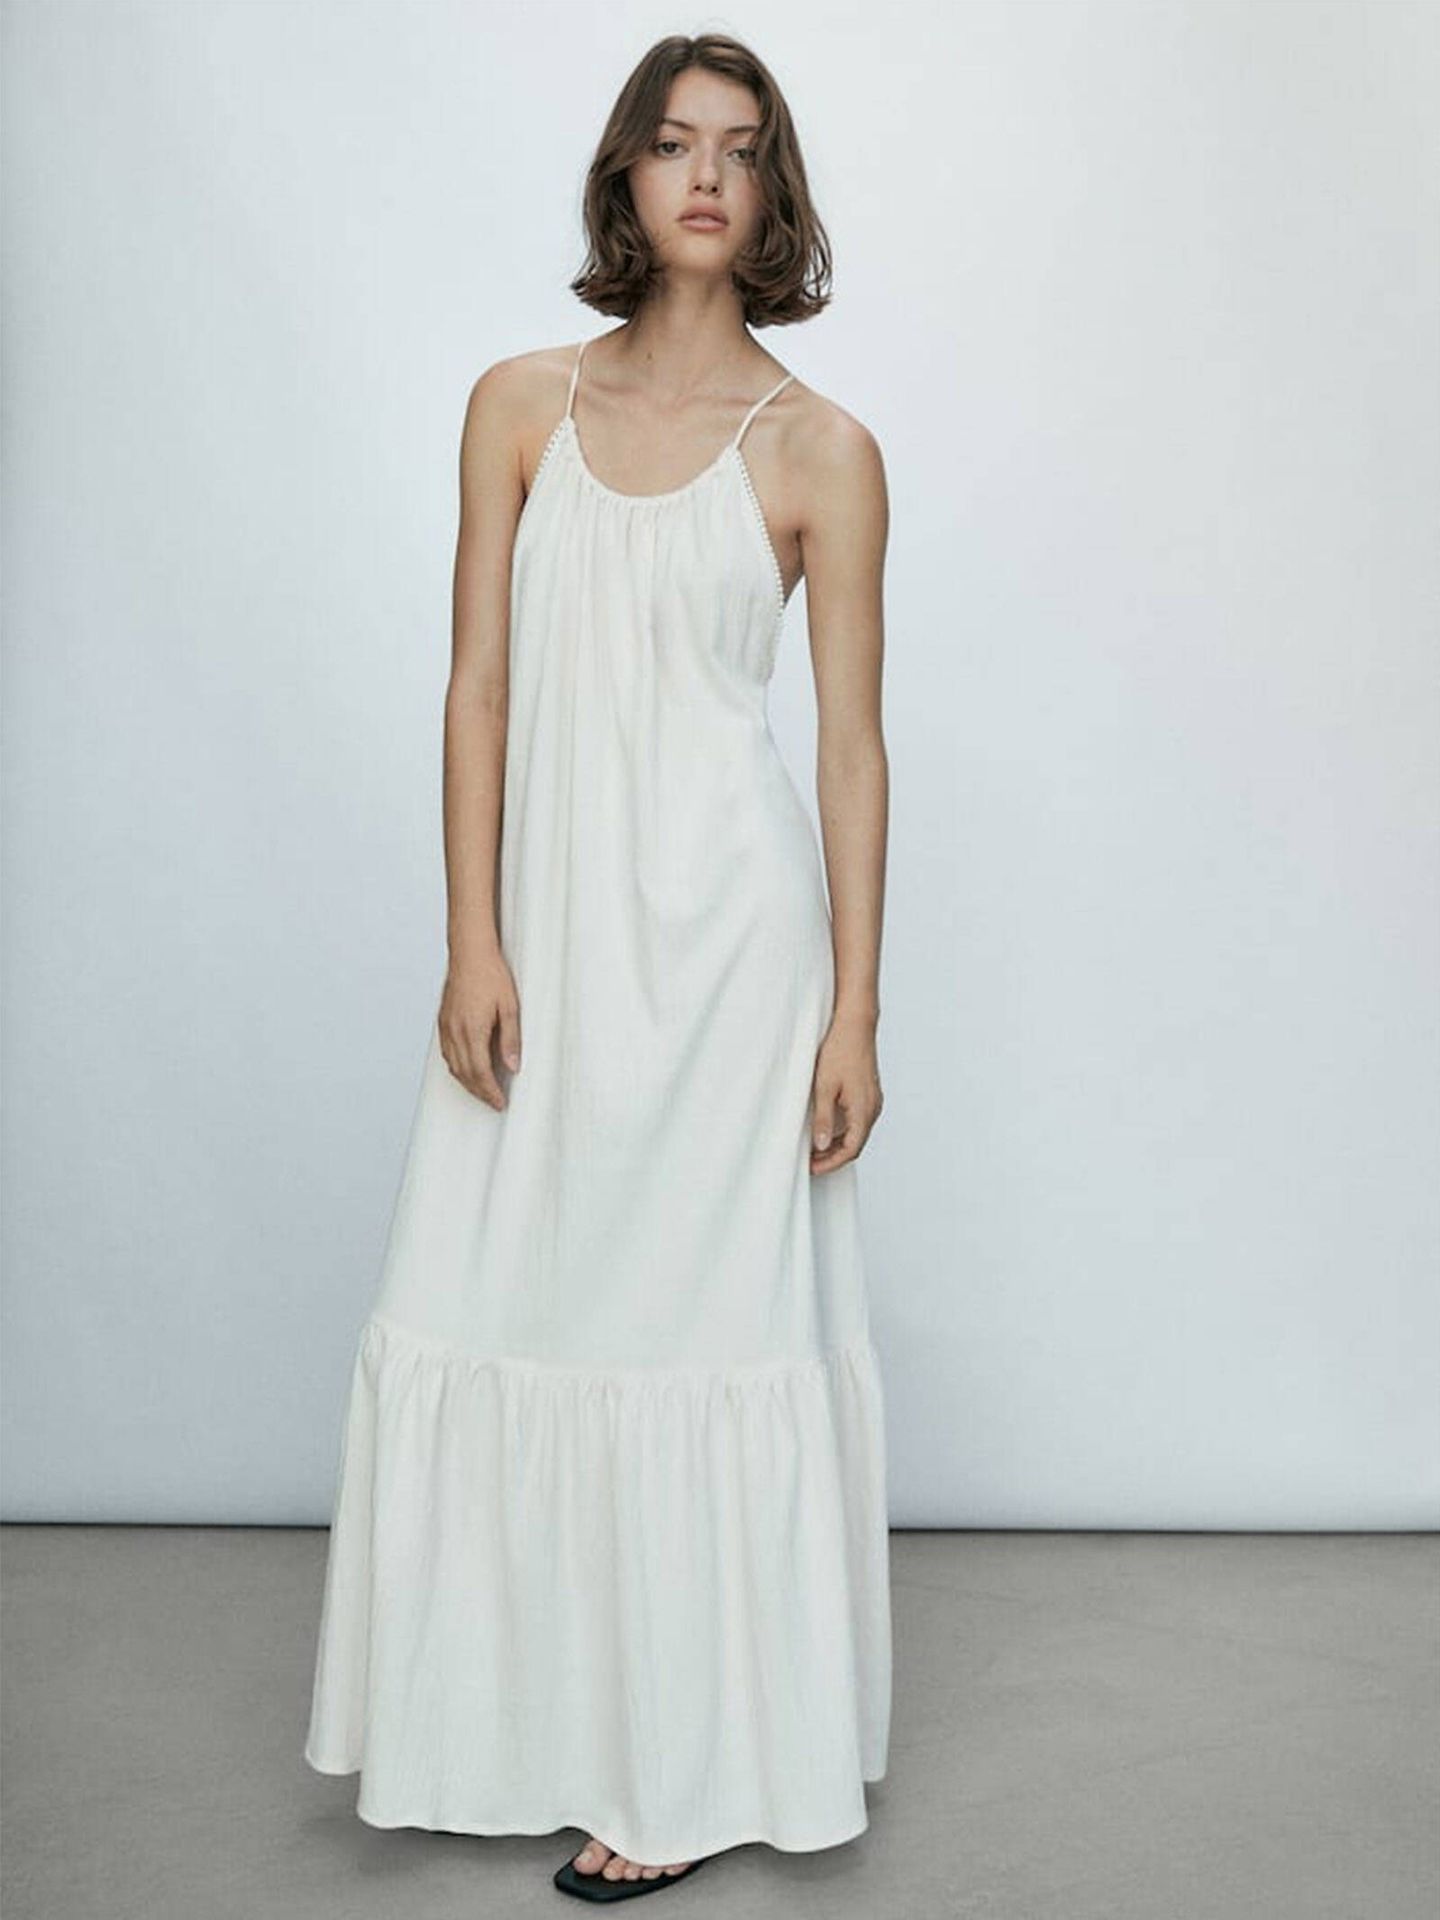 Vestido blanco low cost de Massimo Dutti. (Cortesía)